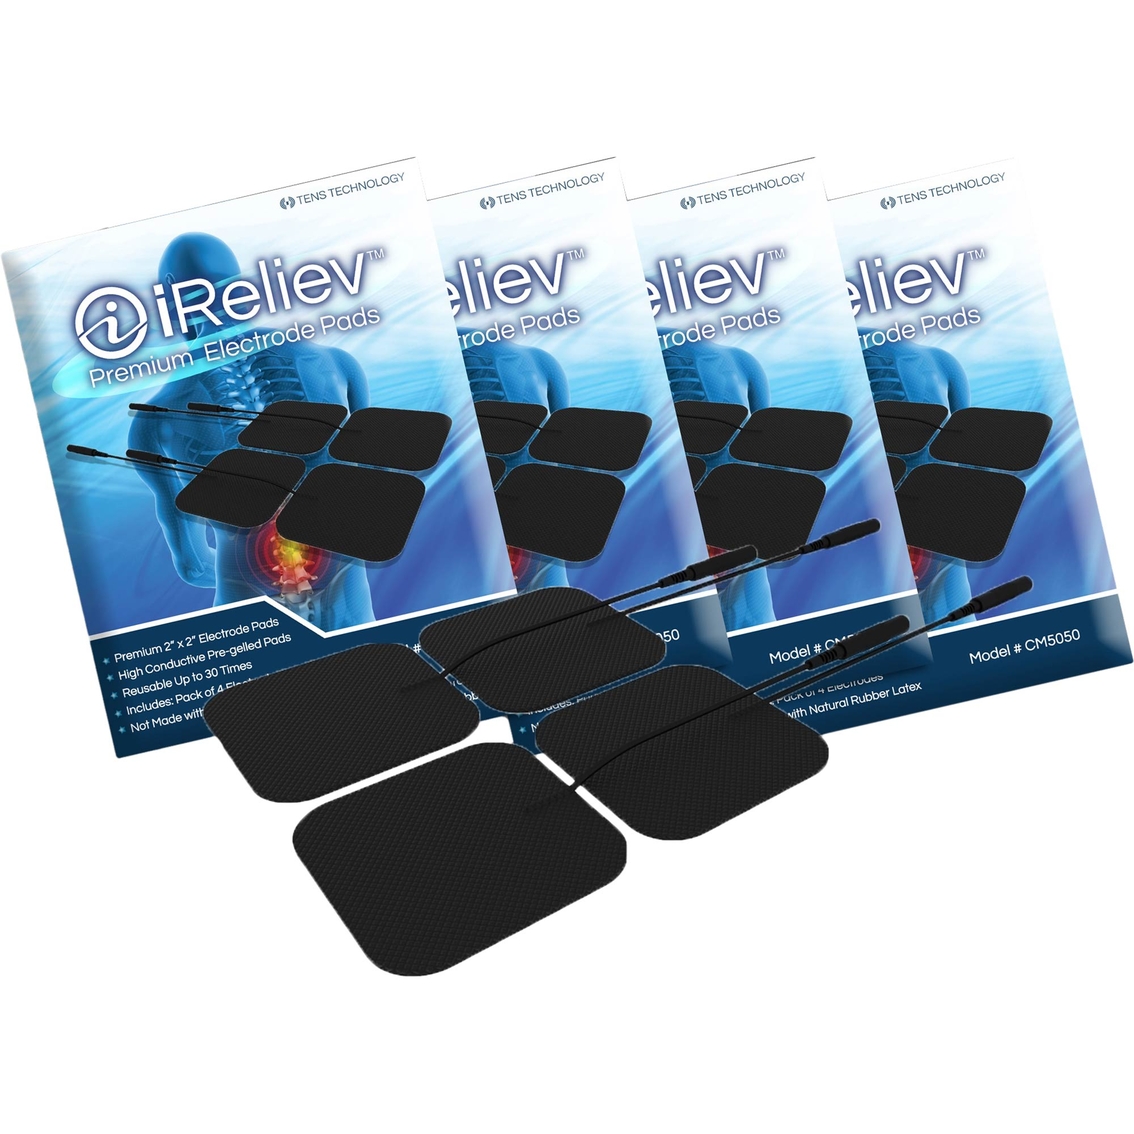 iReliev Premium 2 x 2 In. TENS Electrode Pads, 4 pk. - Image 2 of 4